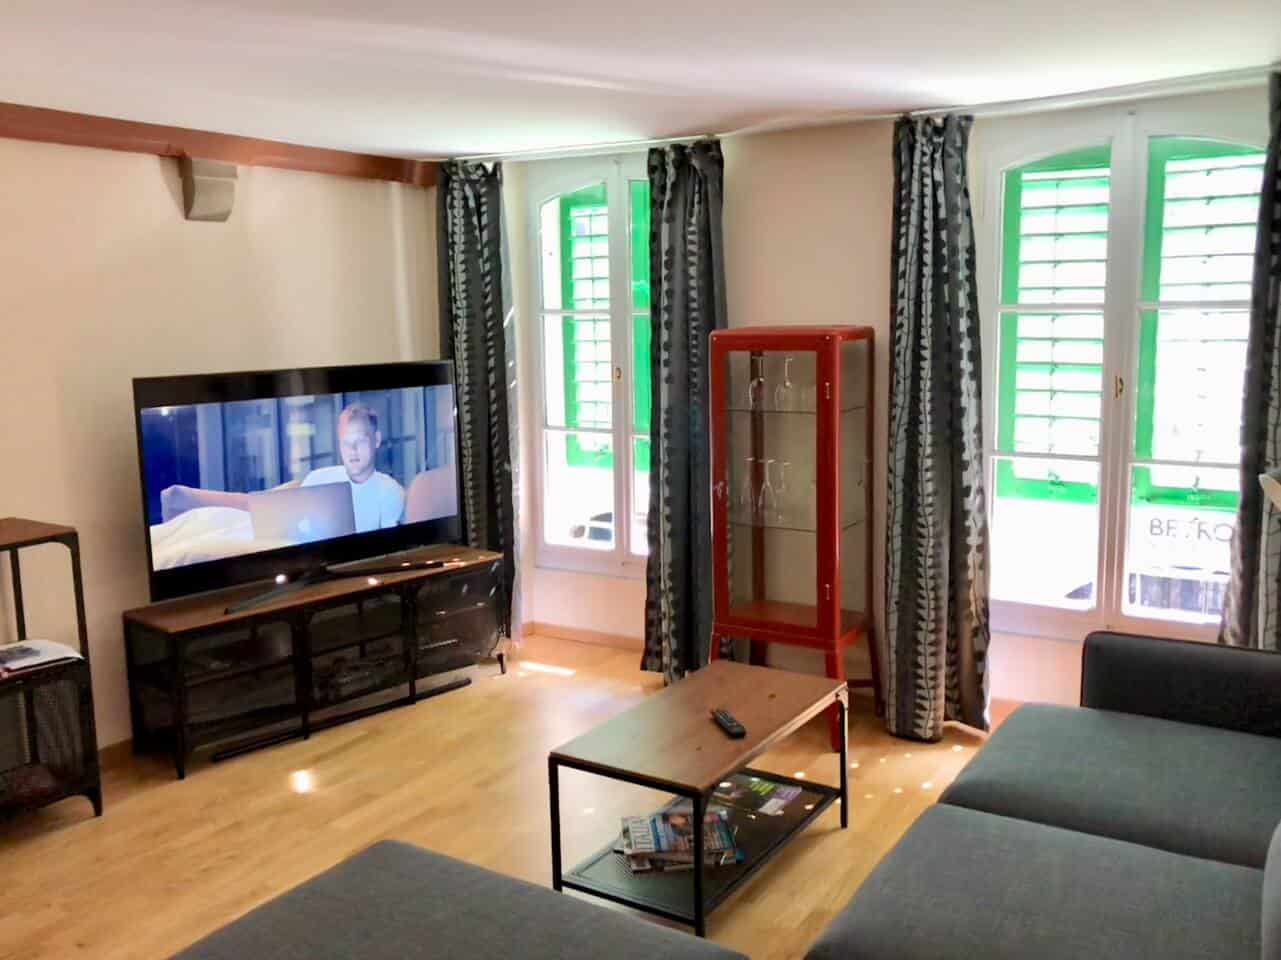 Image of Airbnb rental in Bern, Switzerland